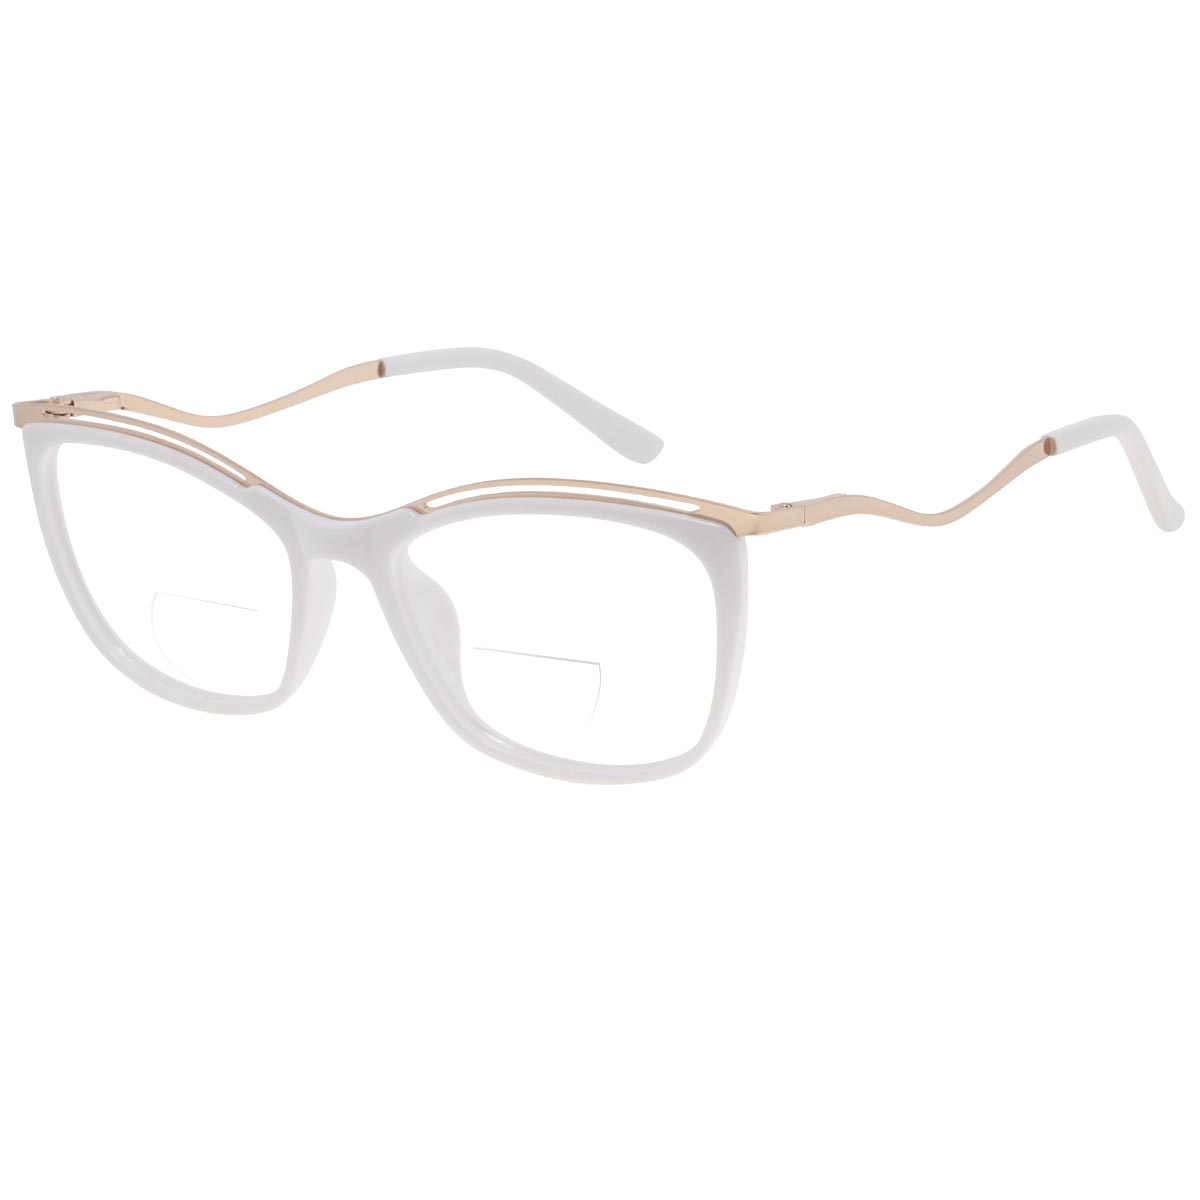 Annon - Square White Reading Glasses for Women